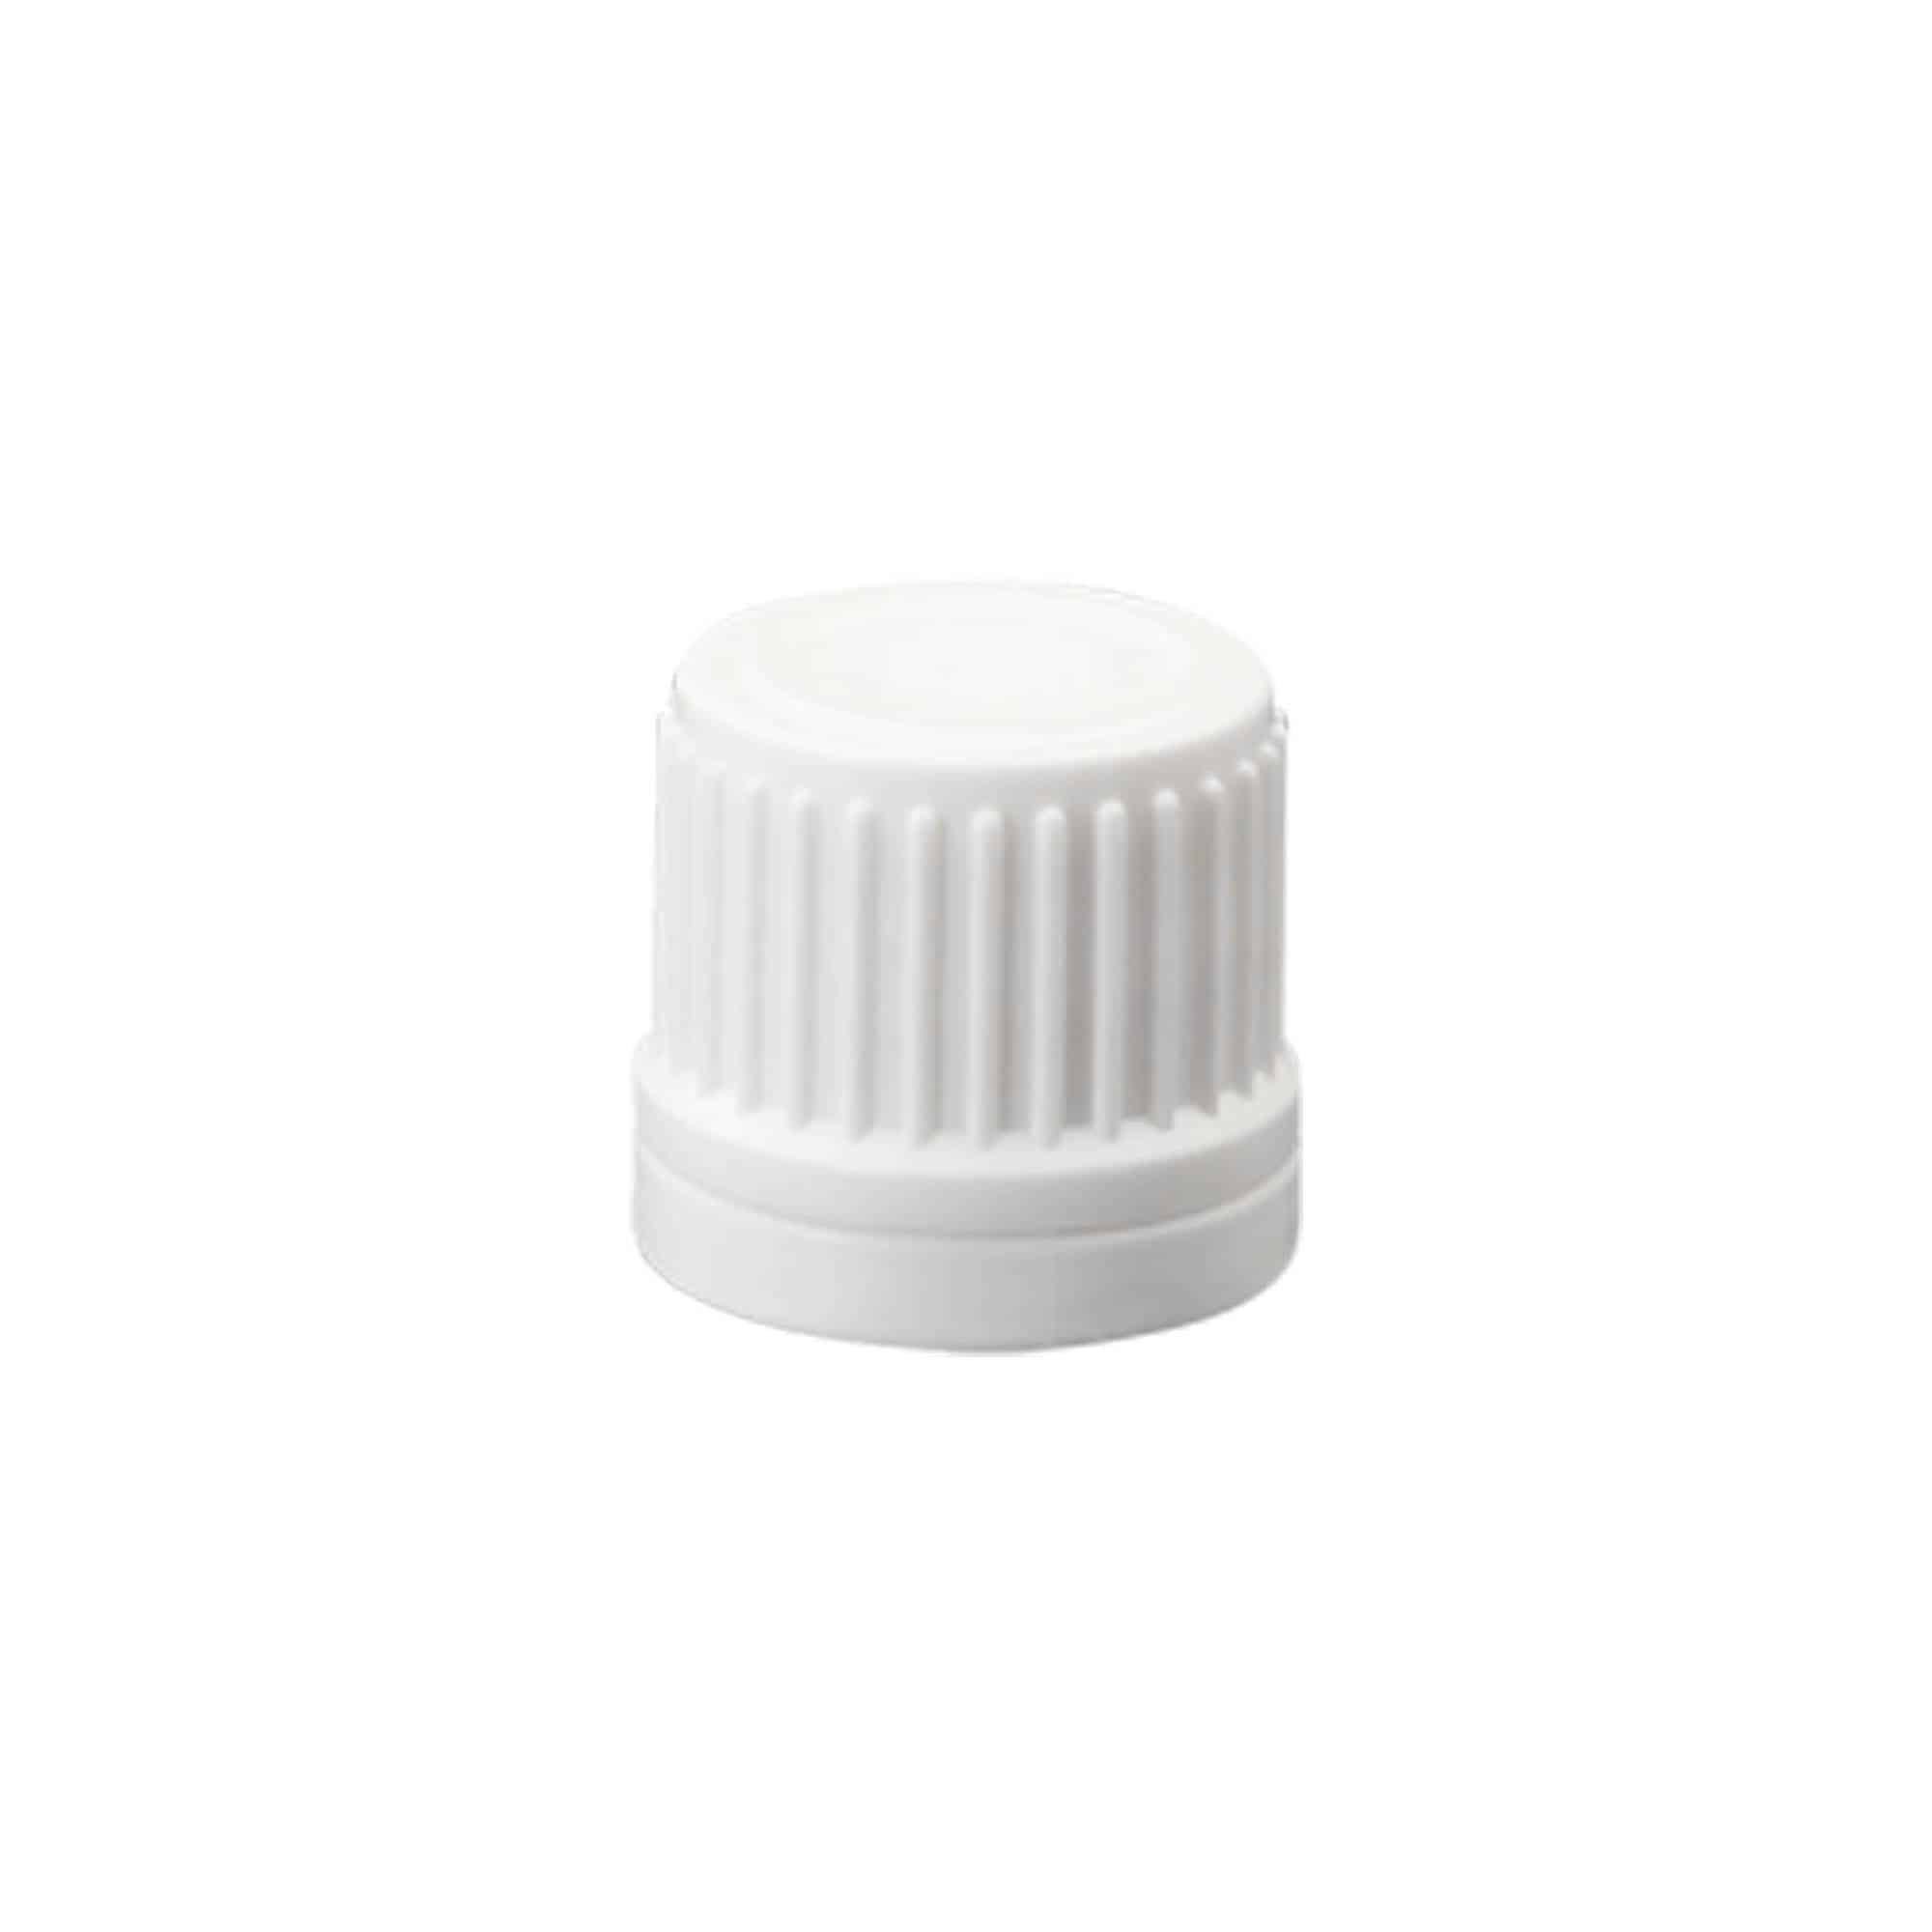 Inserção para frasco Roll-On de 50 ml, plástico PEBD, branco, natural